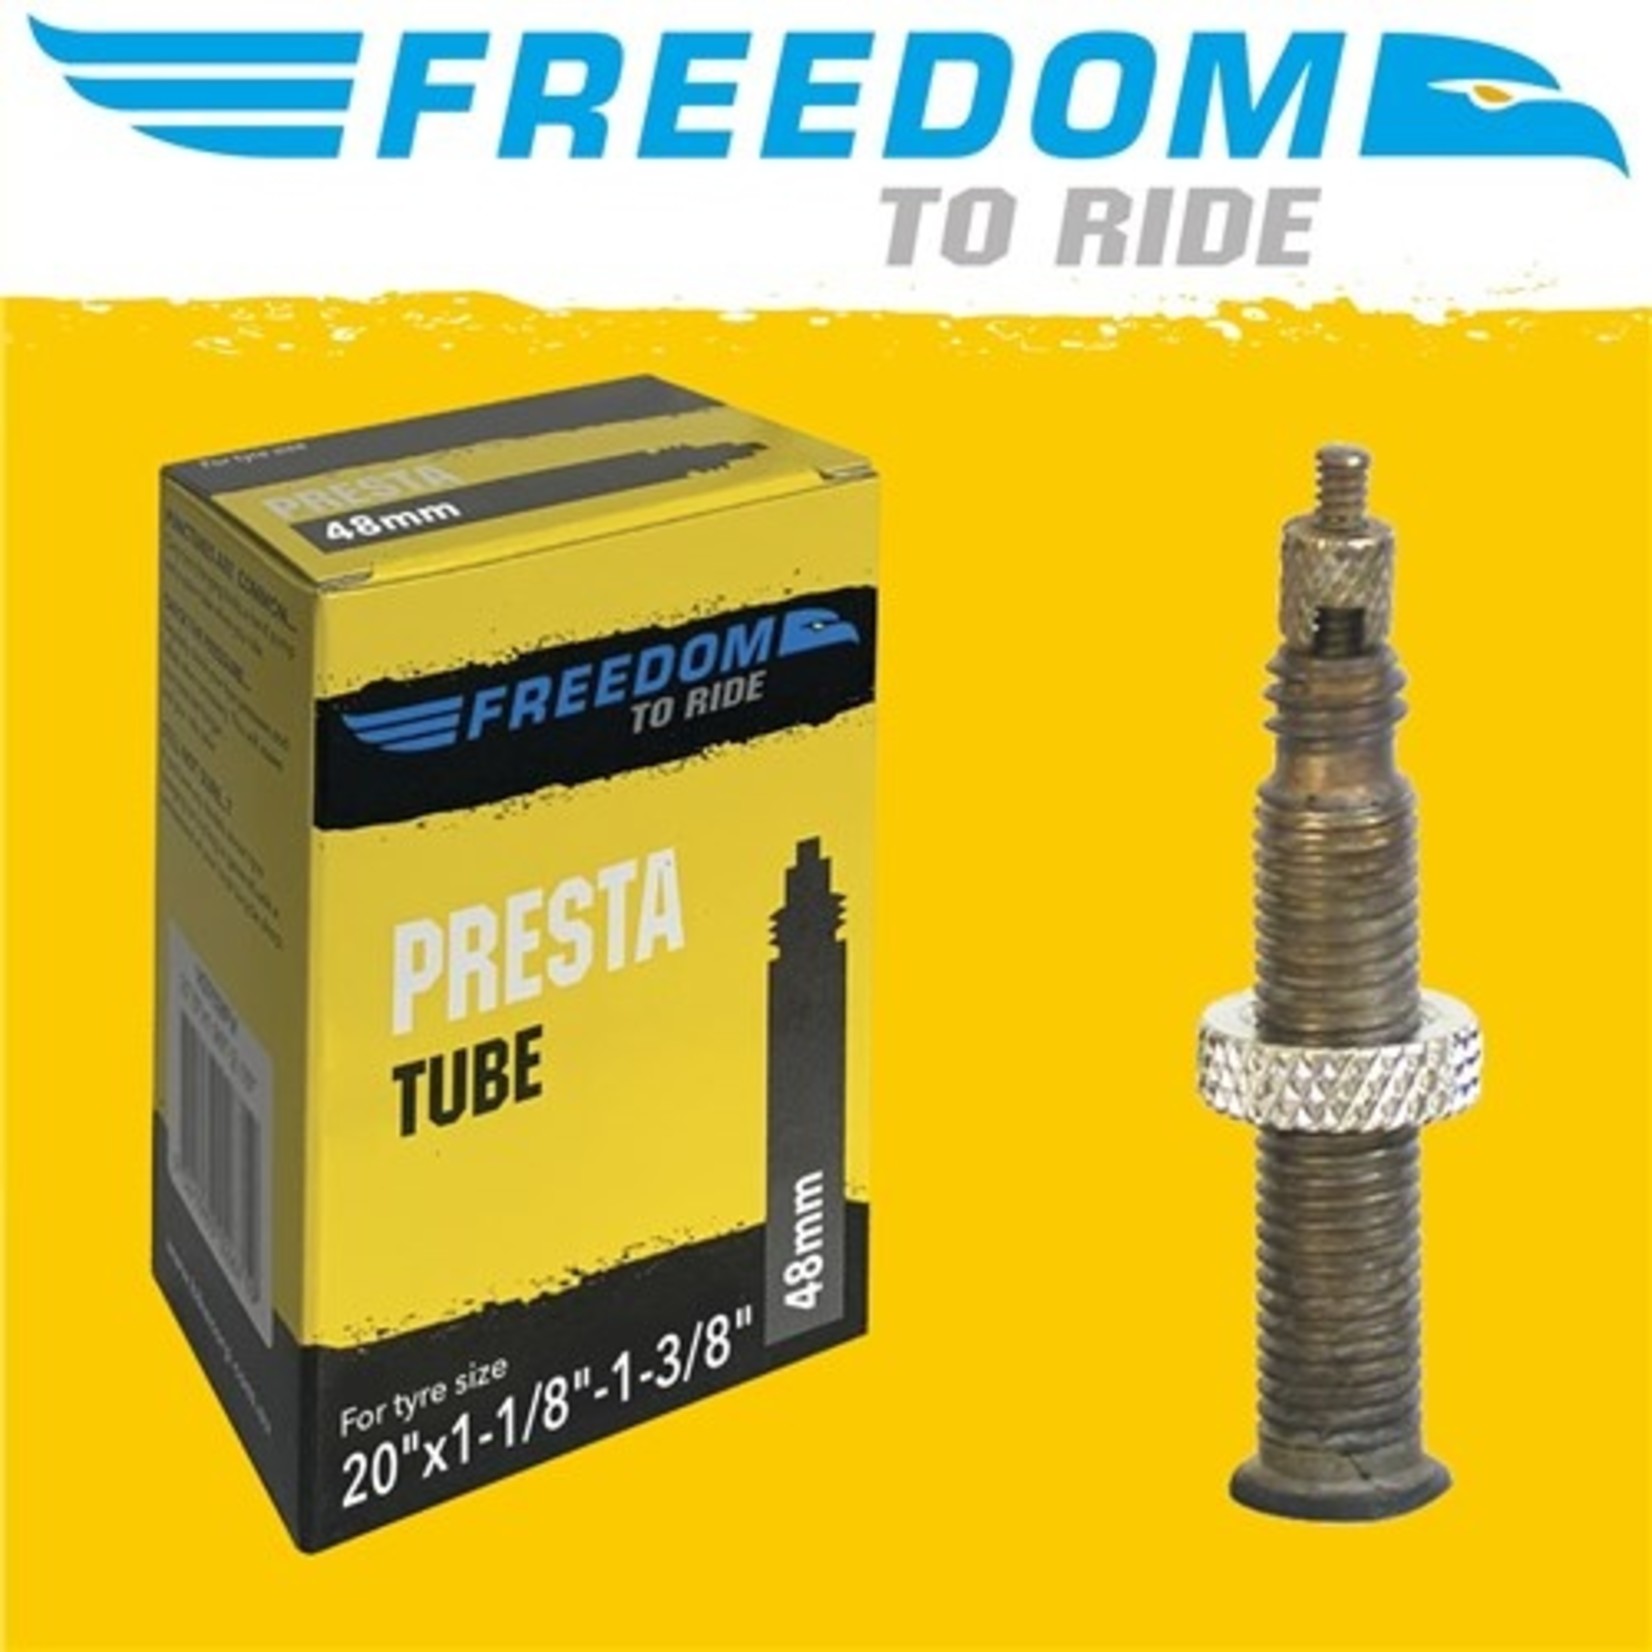 Freedom Freedom Bike Tube - 20" X 1-1/8-3/8" - Presta Valve 48mm